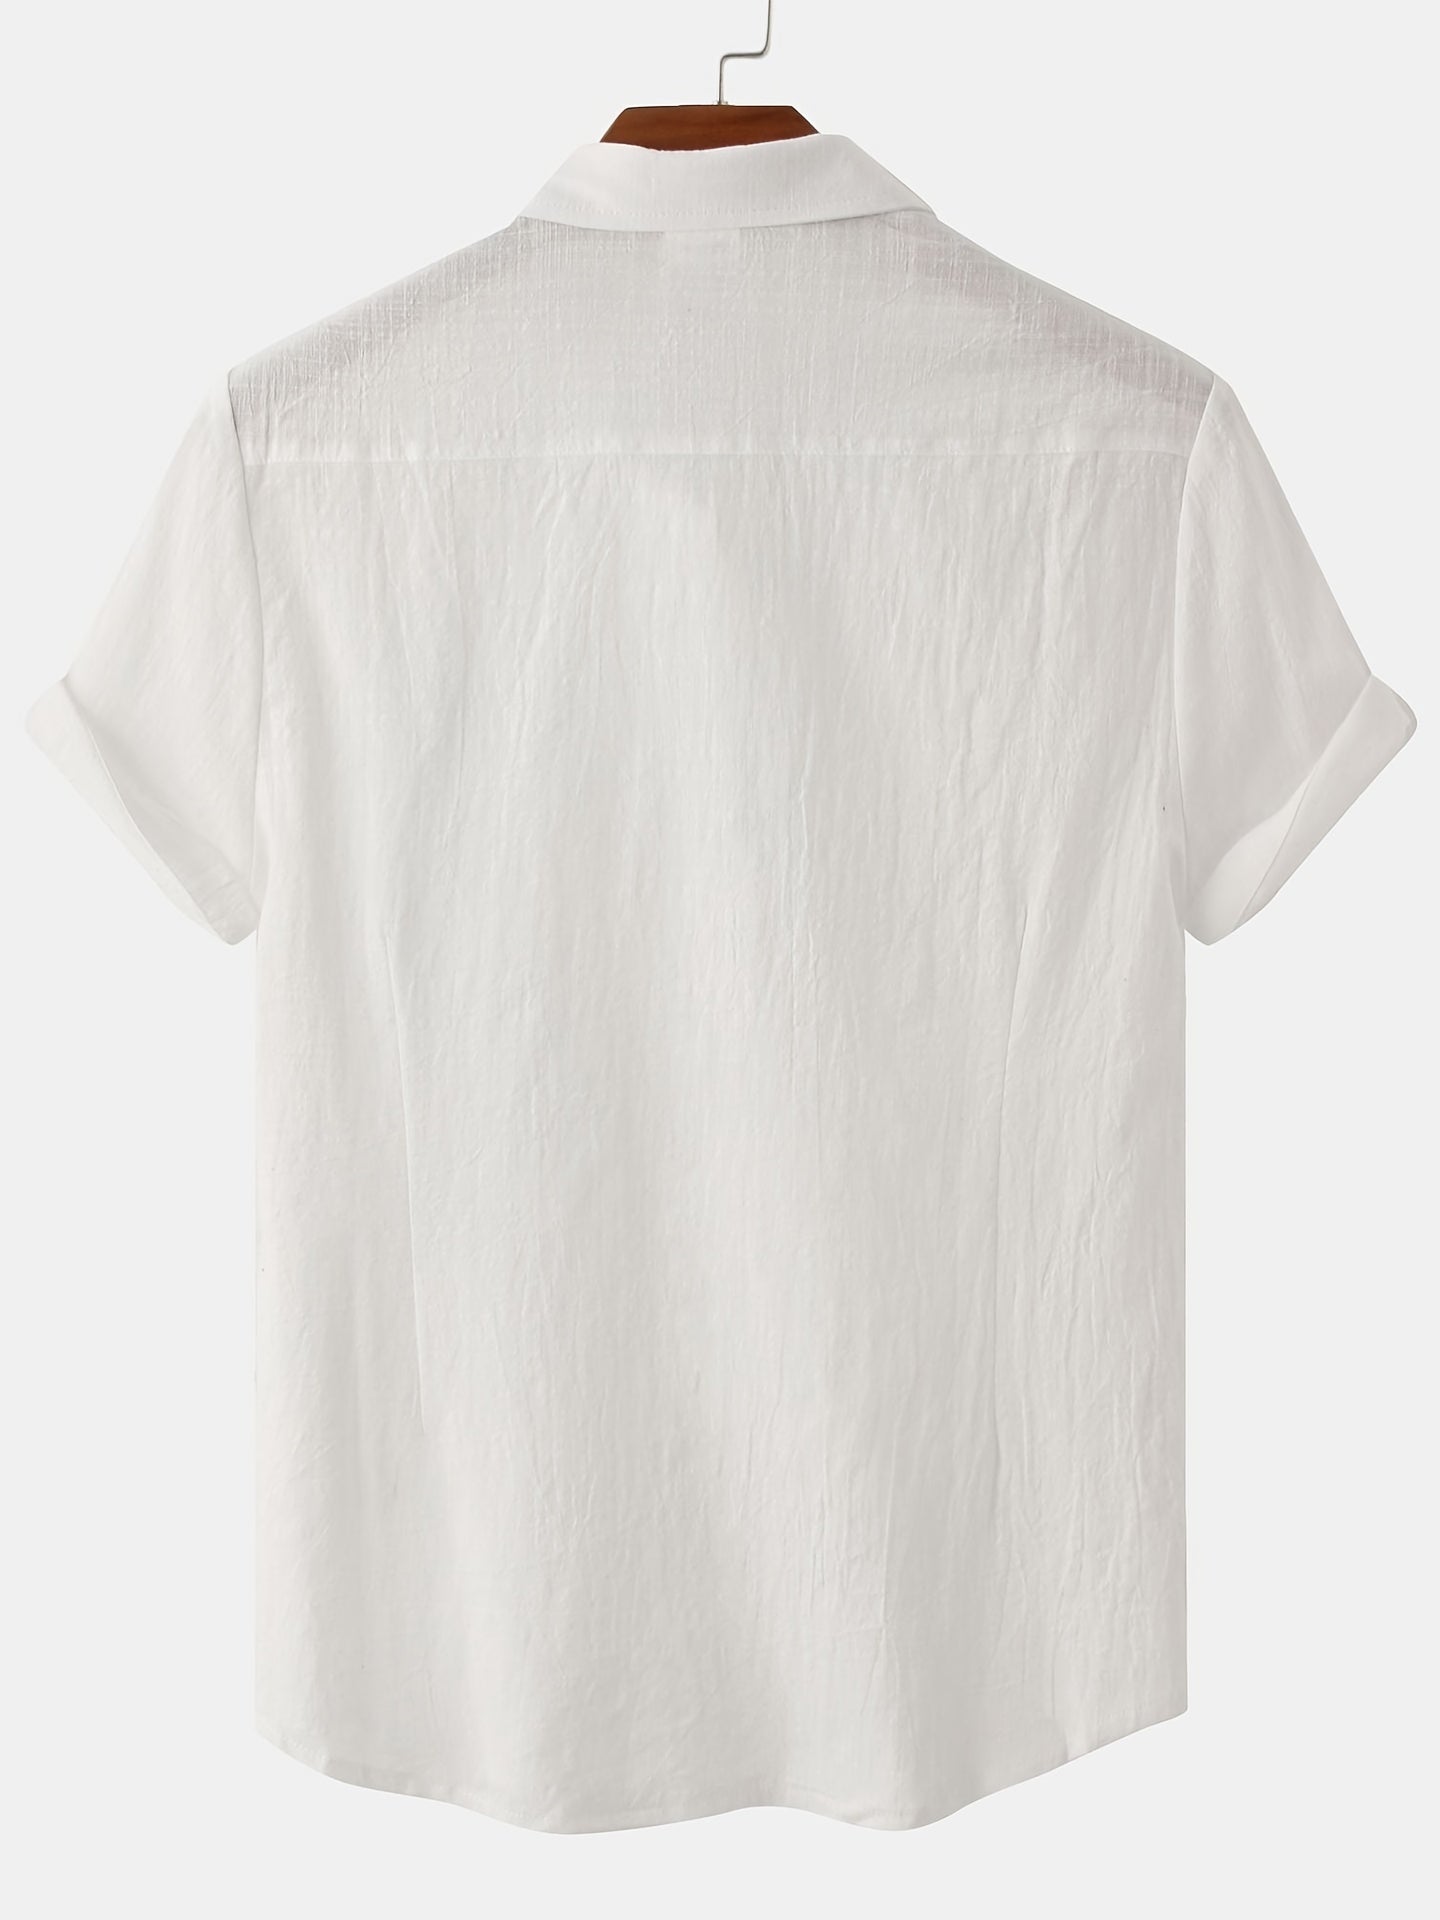 Linen Button-Down Shirt: Lightweight and Comfortable for Summer Fashion